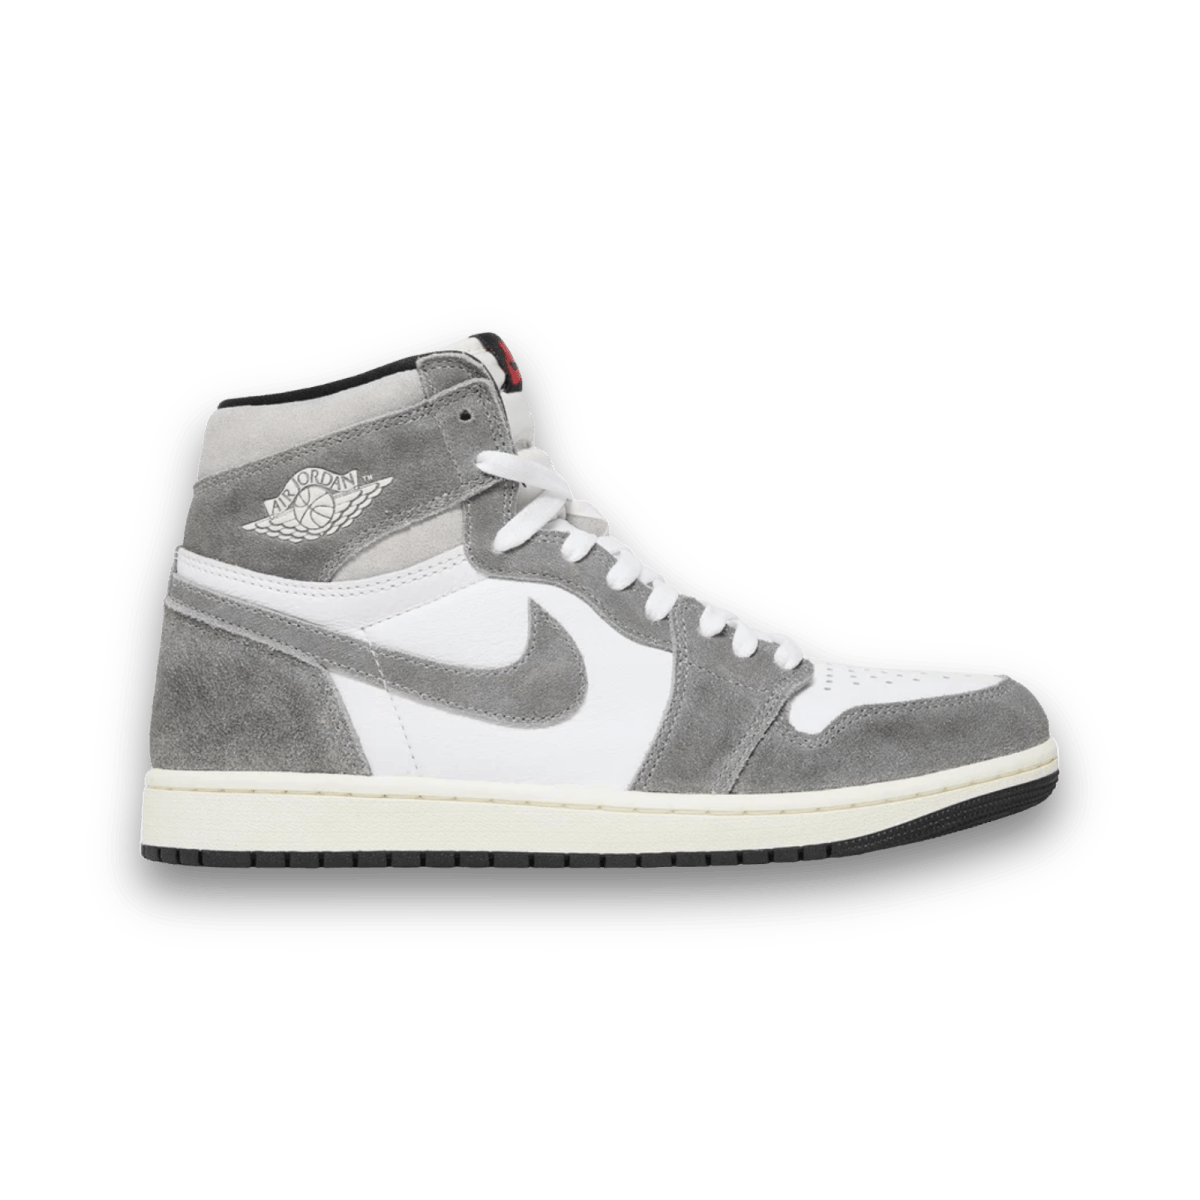 Air Jordan 1 Retro High OG 'Washed Black' - Grade School - High Sneaker - Jordan - Jawns on Fire - sneakers